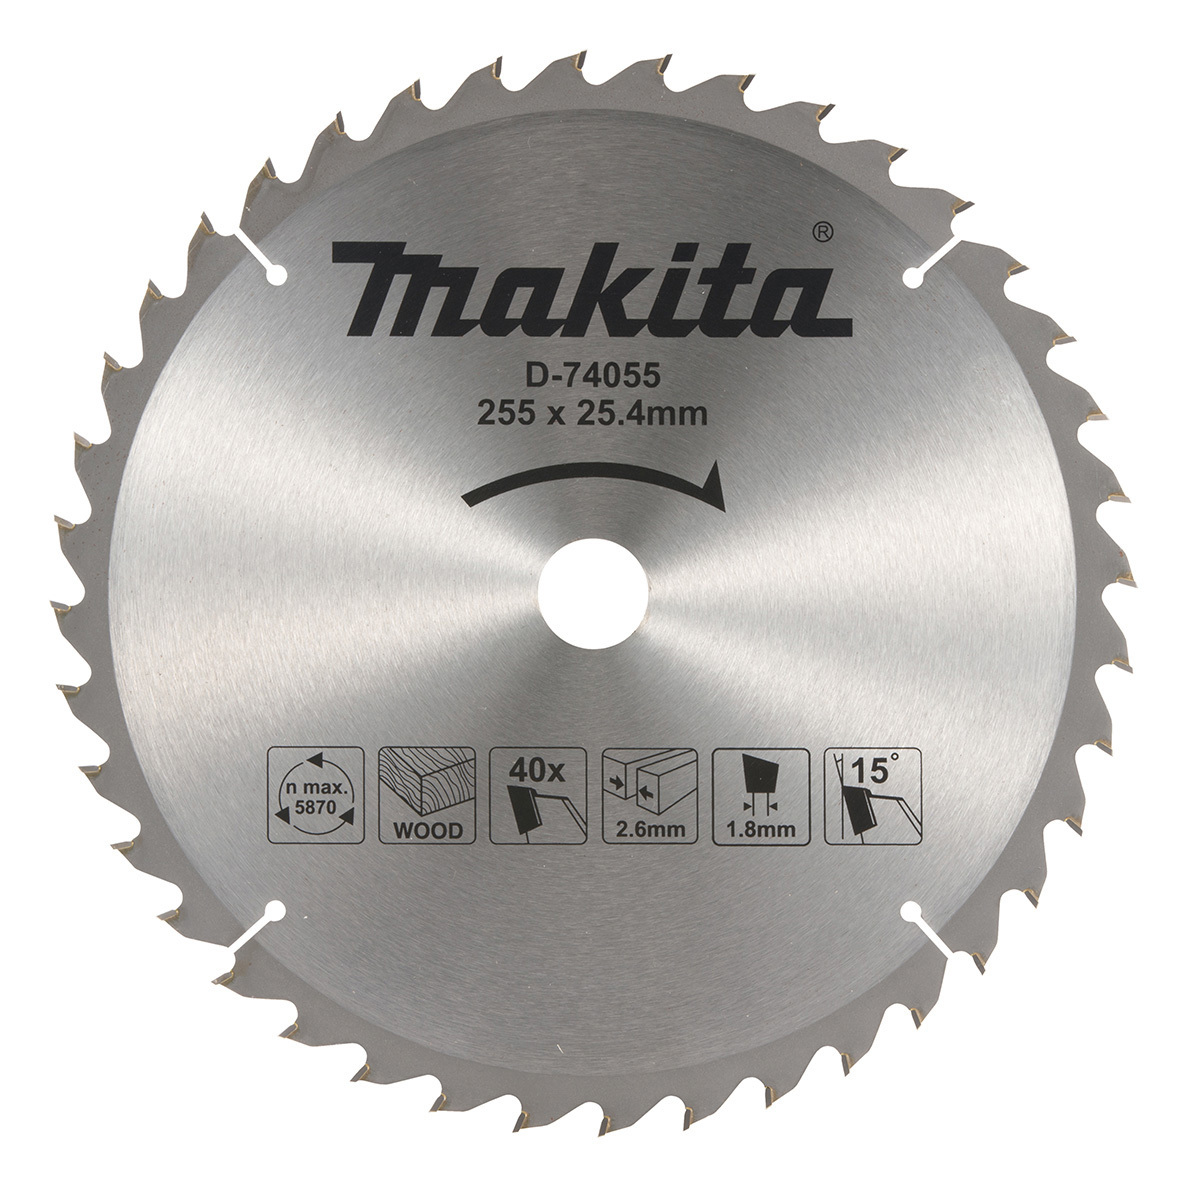 Makita 255mm x 25.4 x 40T TCT Saw Blade Economy (Slide Compound Saw) D-74055